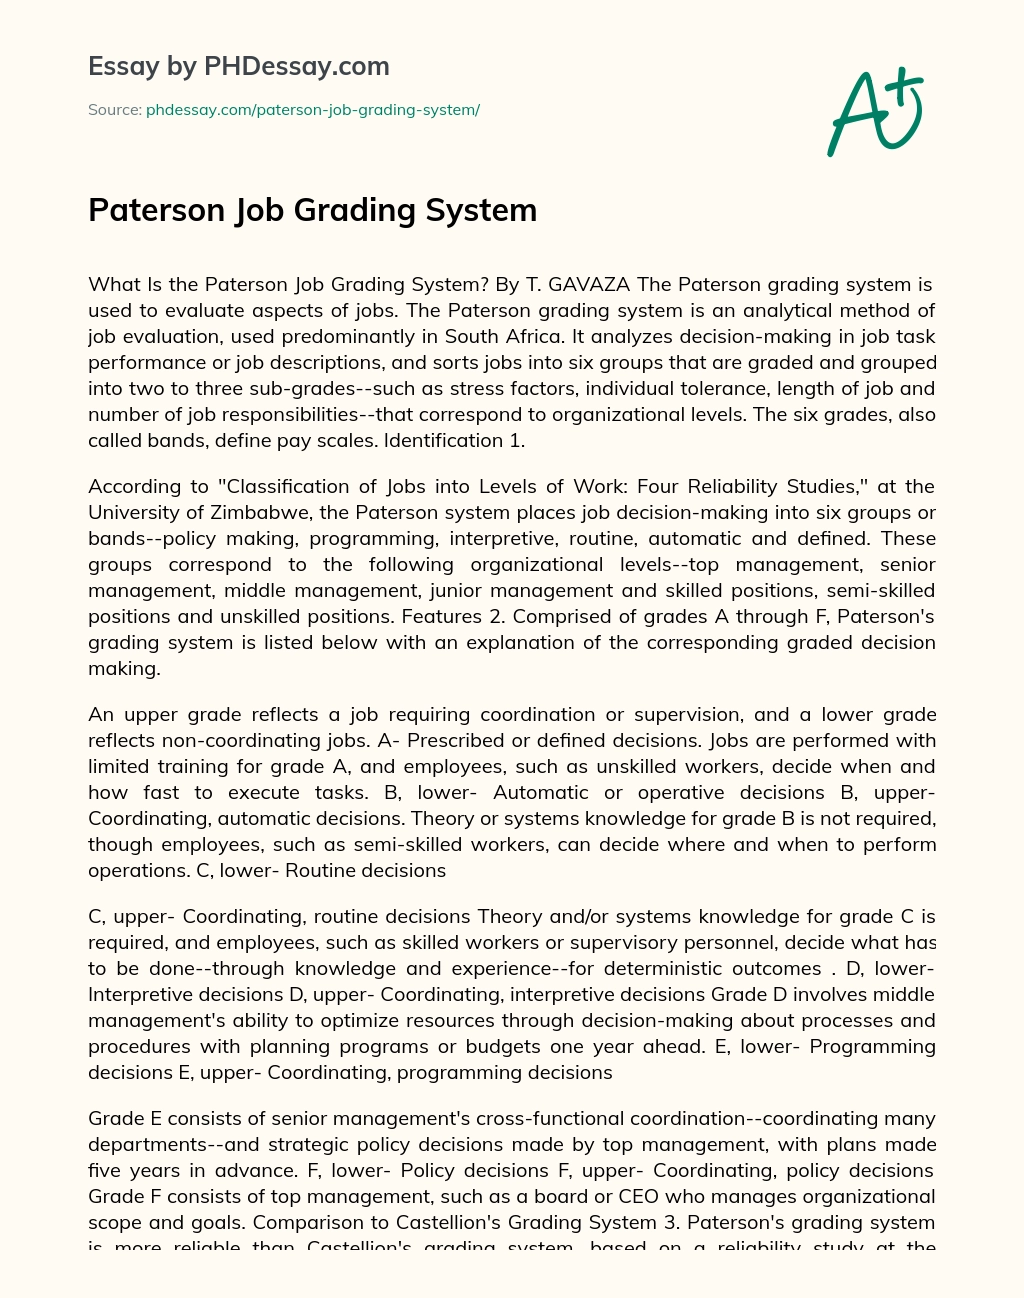 Paterson Job Grading System essay